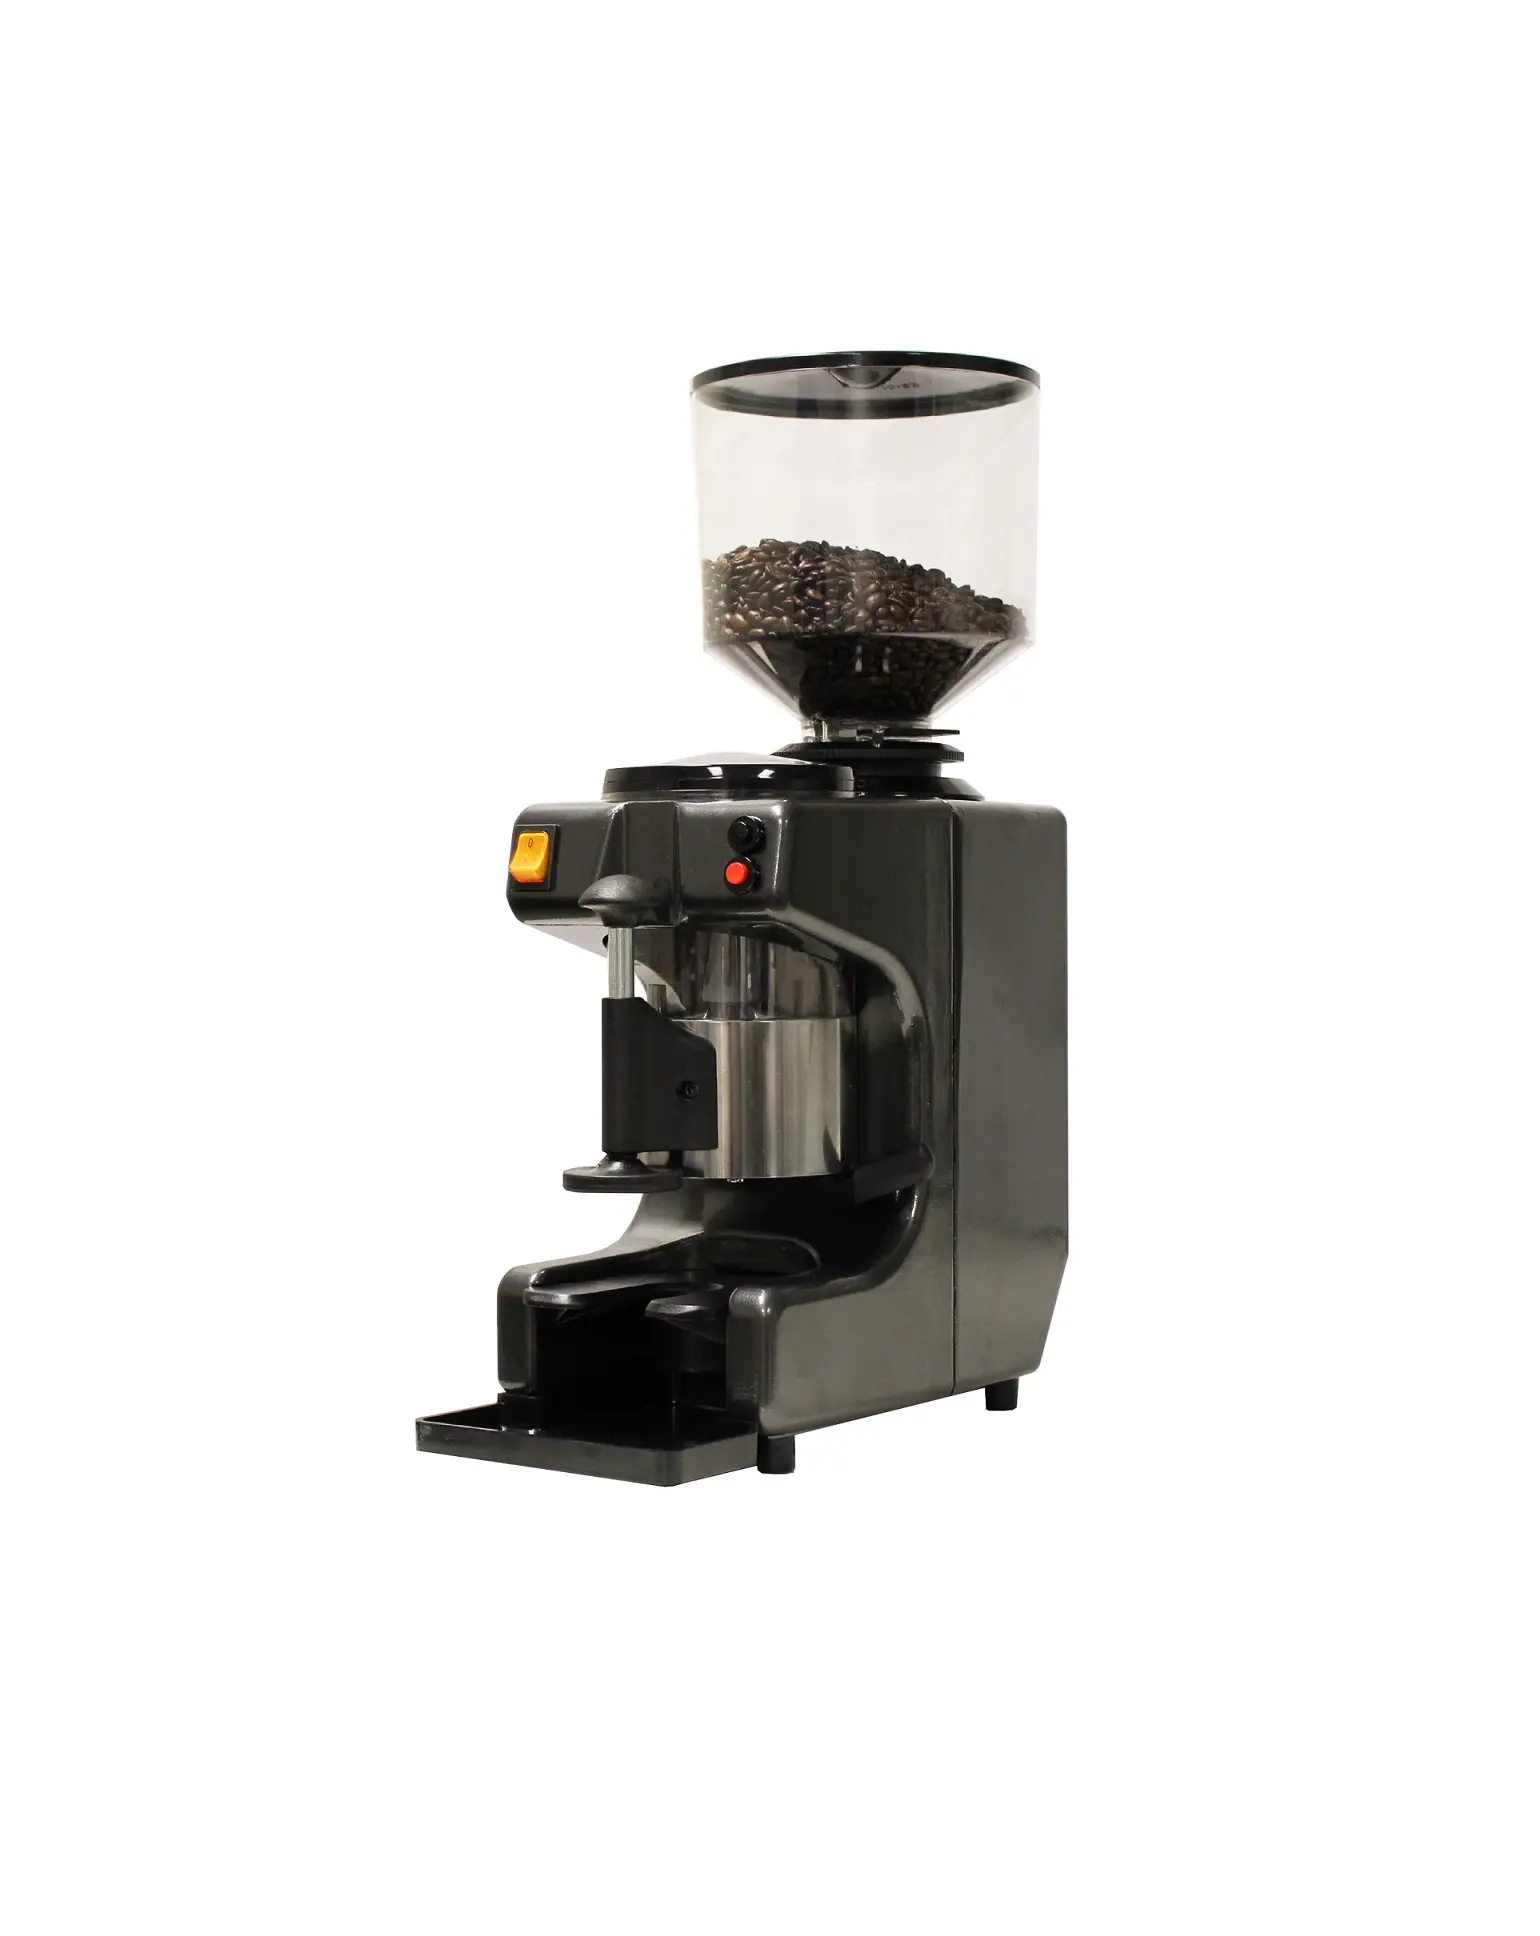 MEGA MG030 Silent Automatic Espresso Coffee Grinder